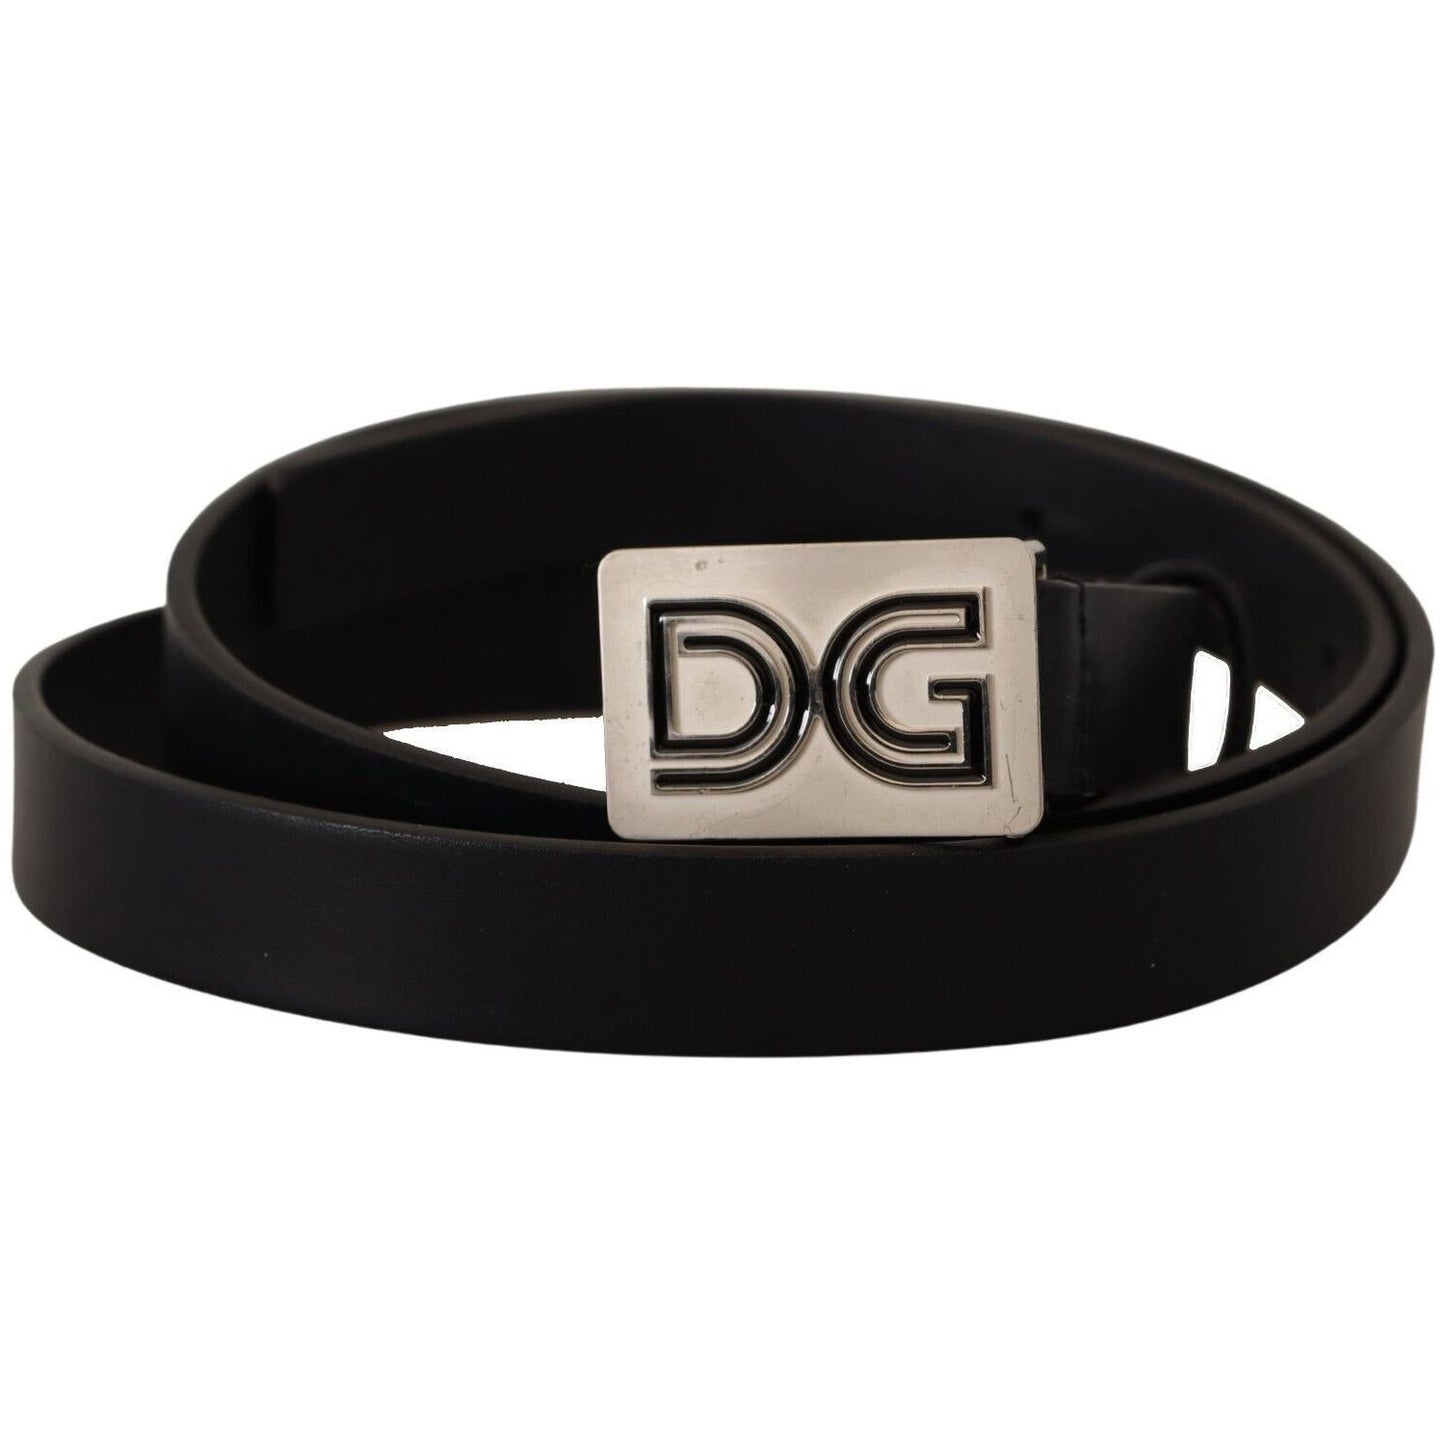 Dolce & Gabbana Elegant Black Leather Belt with Silver Buckle black-leather-silver-dg-logo-buckle-belt s-l1600-234-781c1640-fe7.jpg